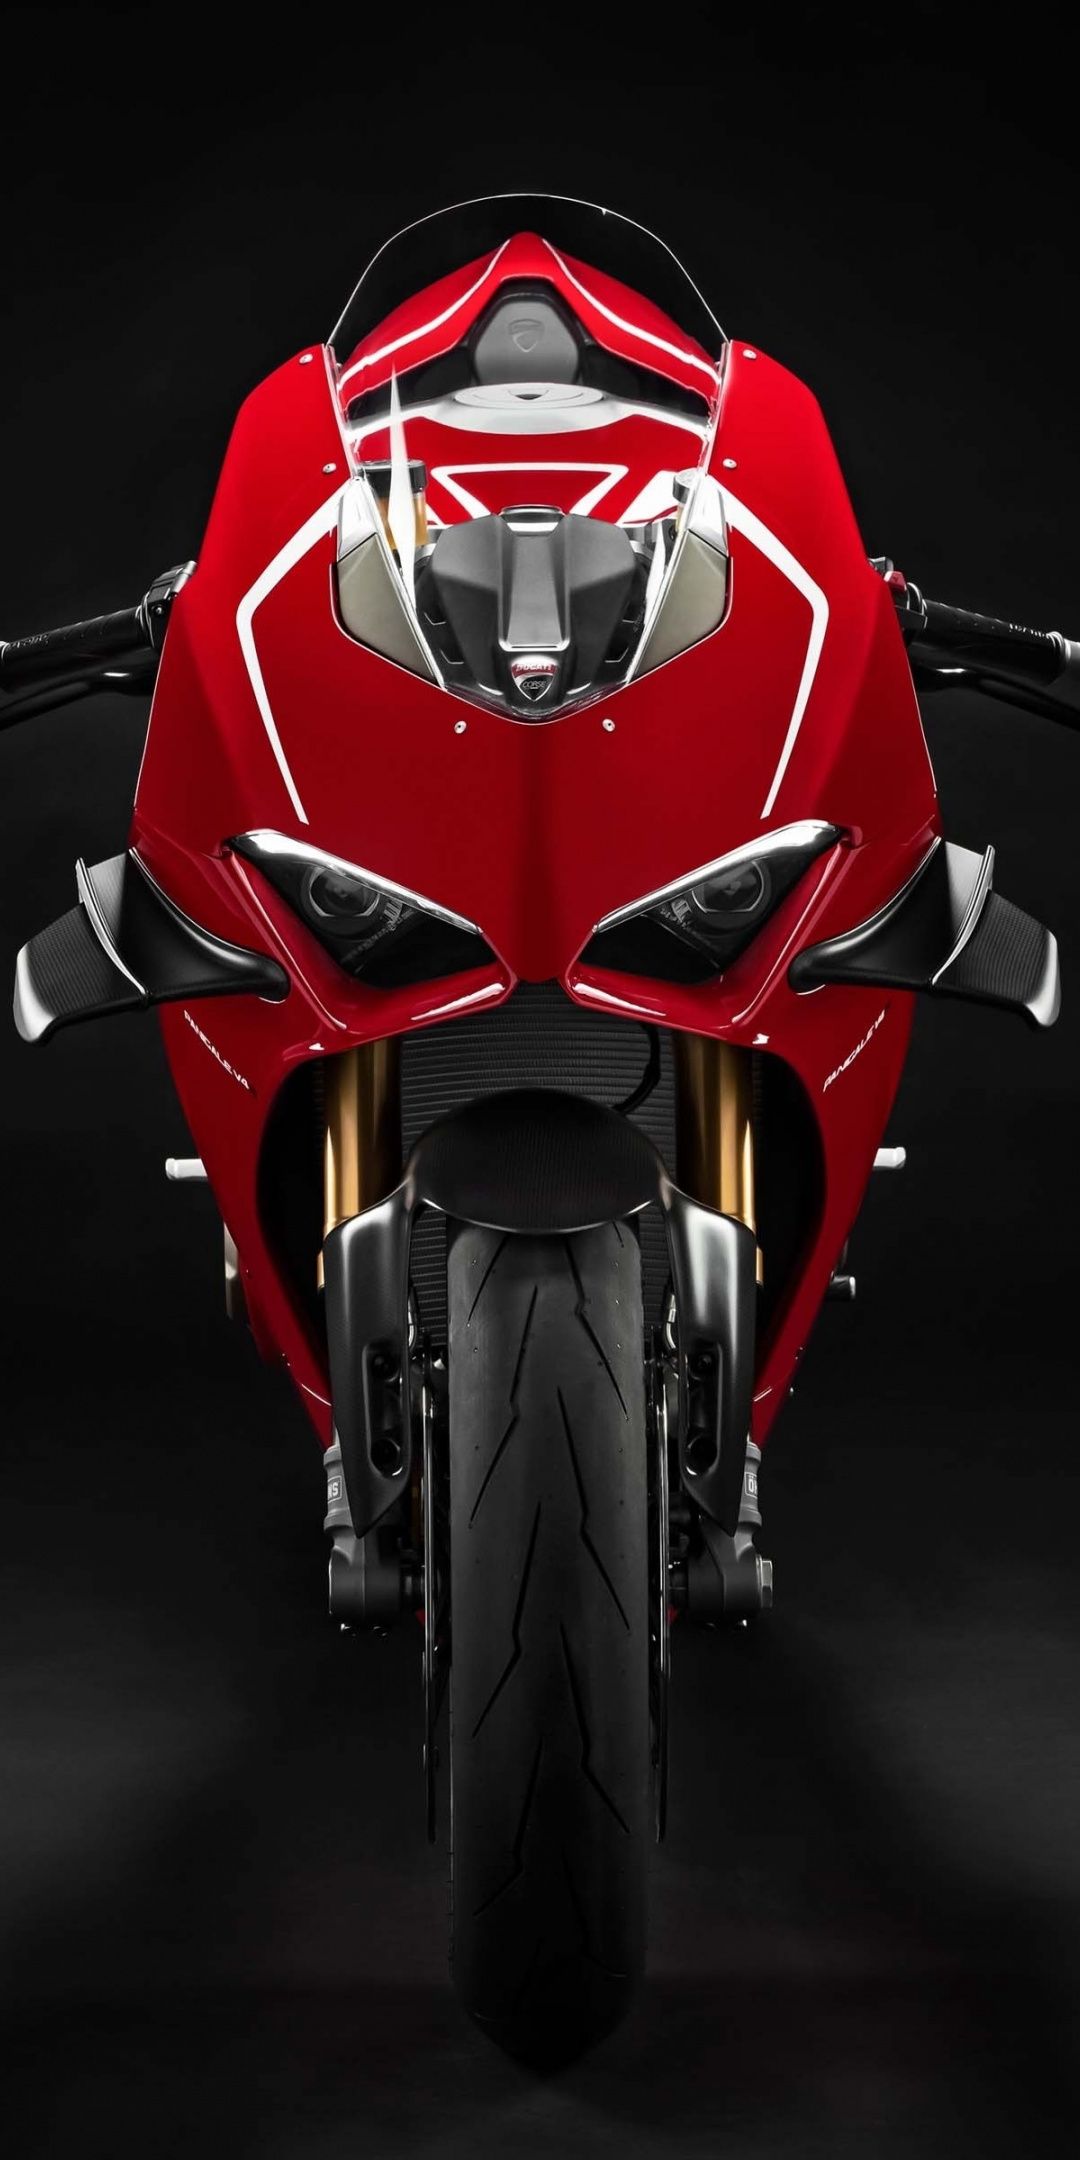 Ducati Panigale V4 R Pure Racing bike 2019 1080x2160 wallpaper 1080x2160